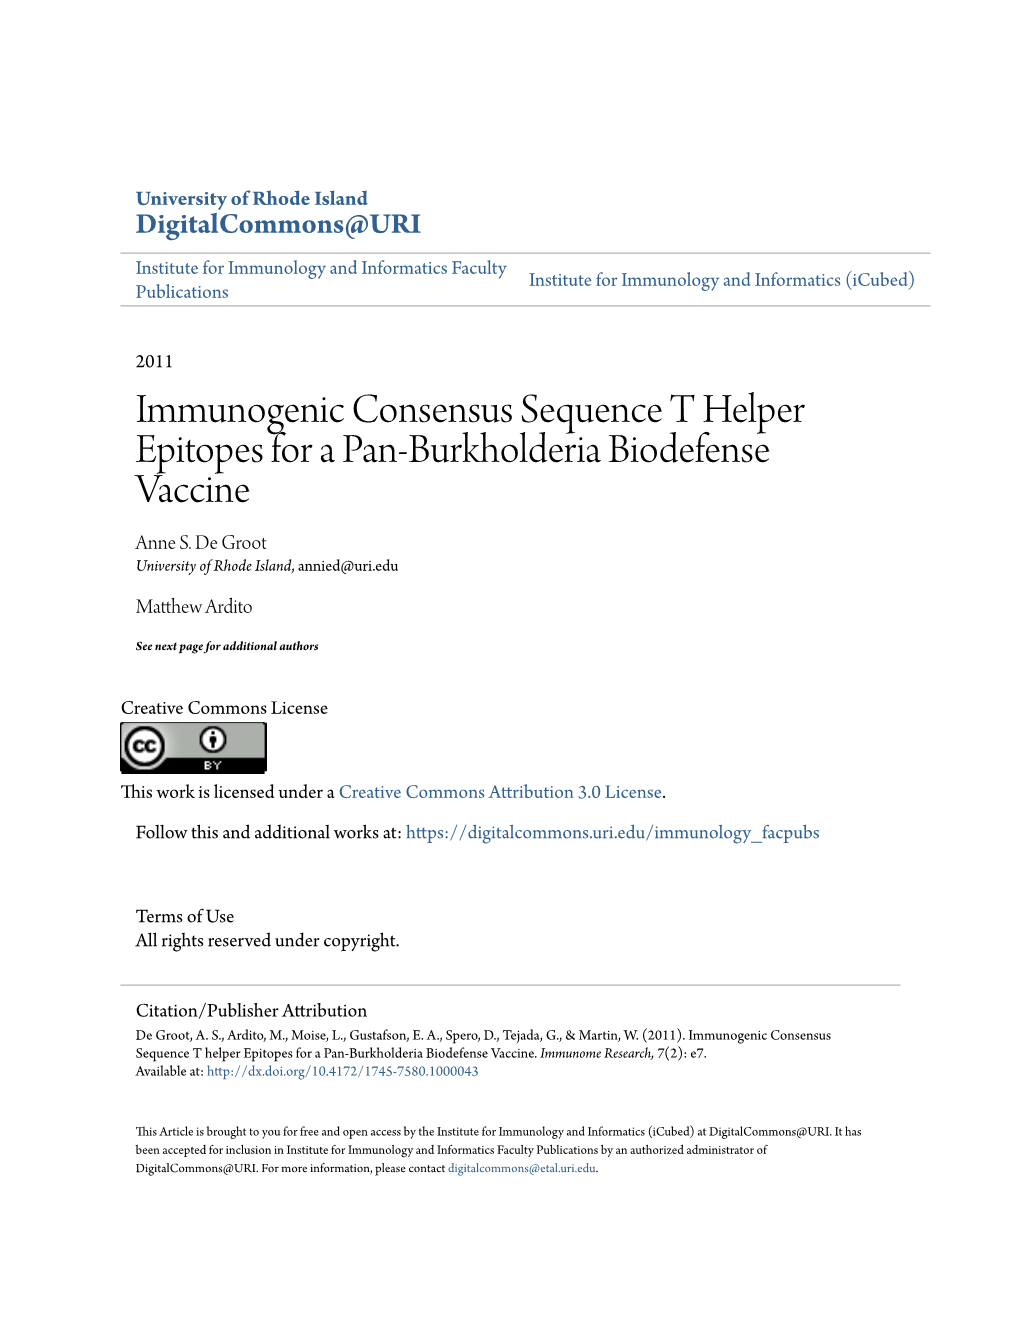 Immunogenic Consensus Sequence T Helper Epitopes for a Pan-Burkholderia Biodefense Vaccine Anne S